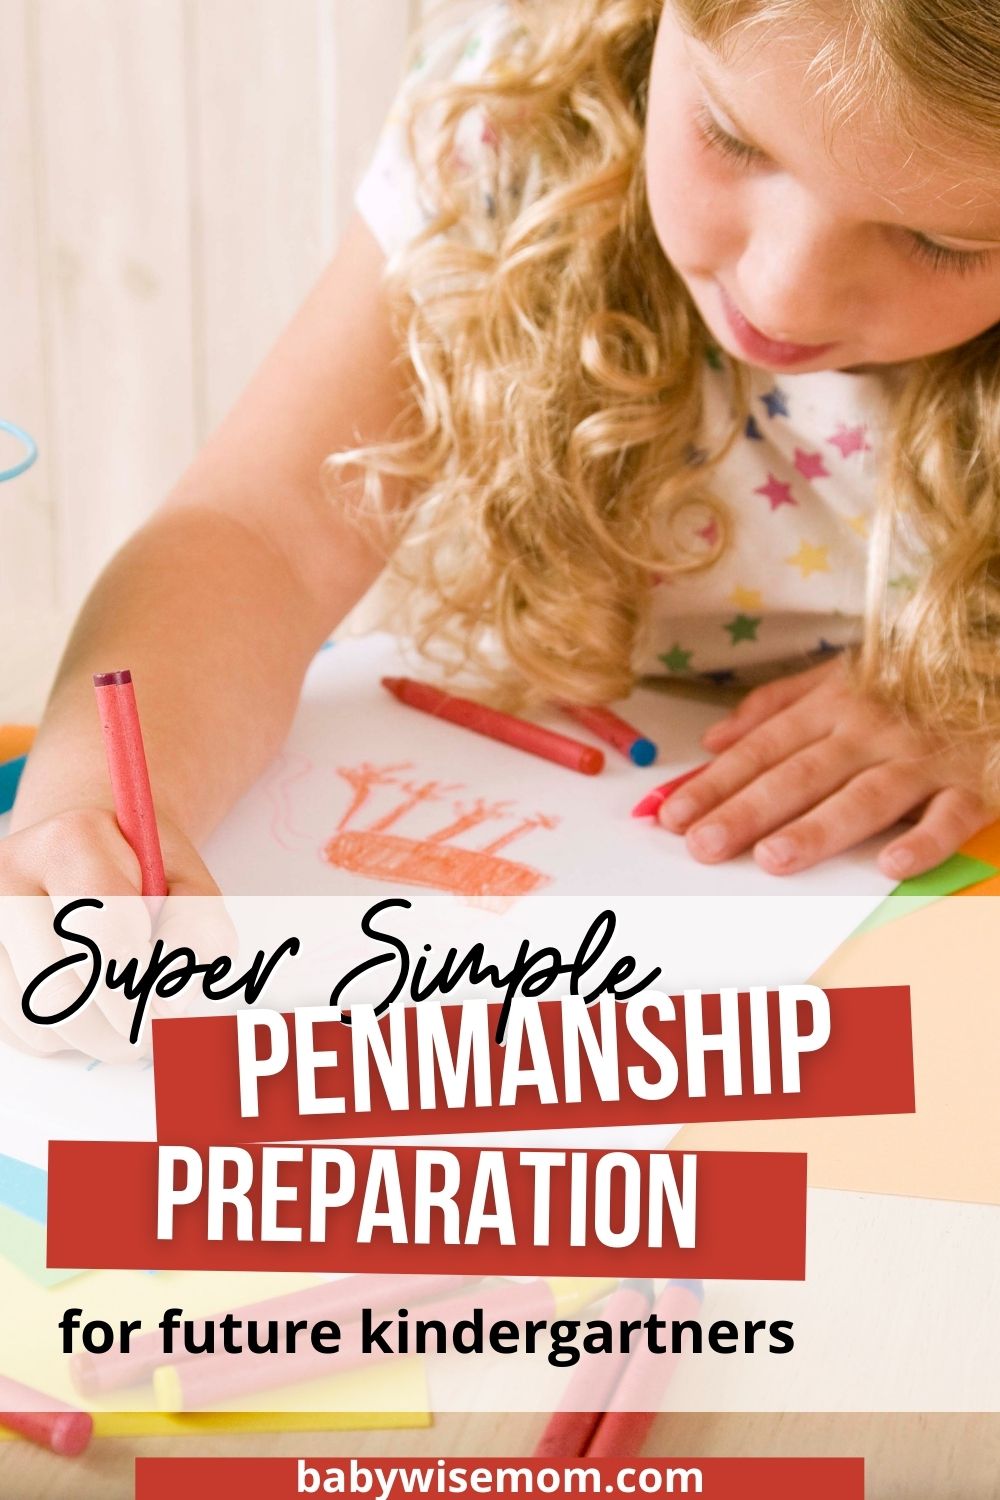 Penmanship prep for future kindergartners